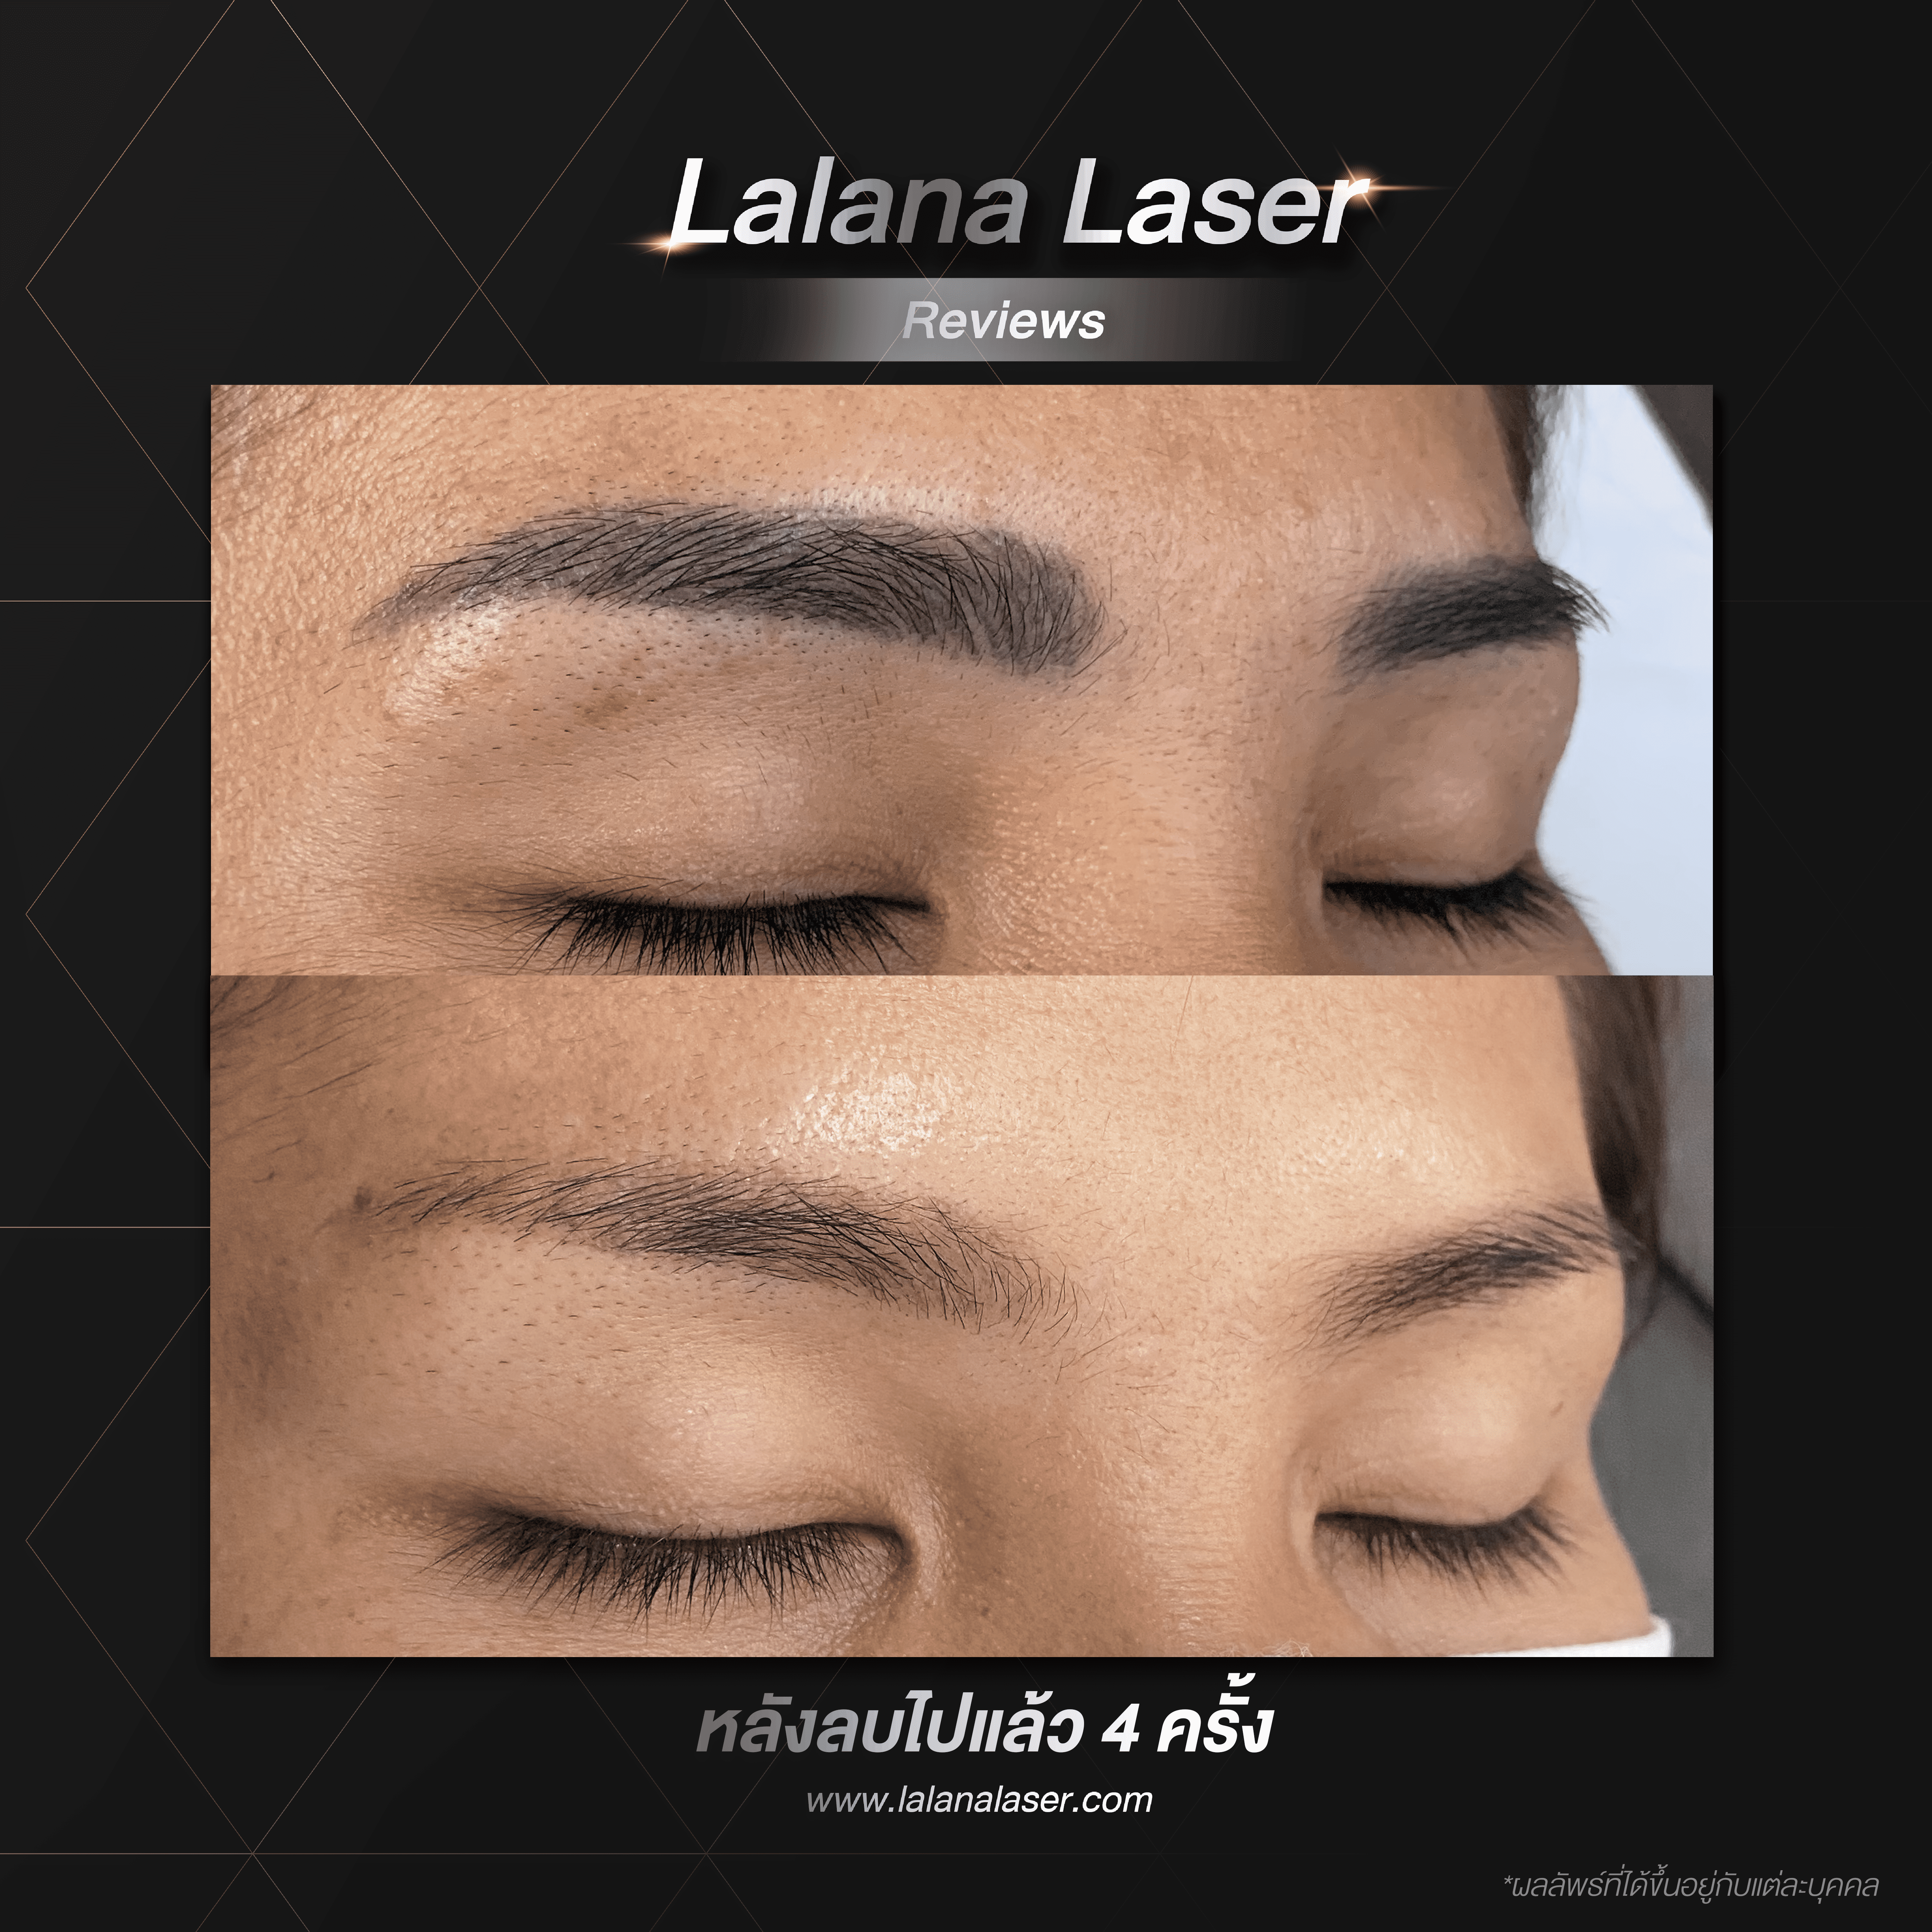 Lalana-laser-reviews-คุณแพรทอง-copy